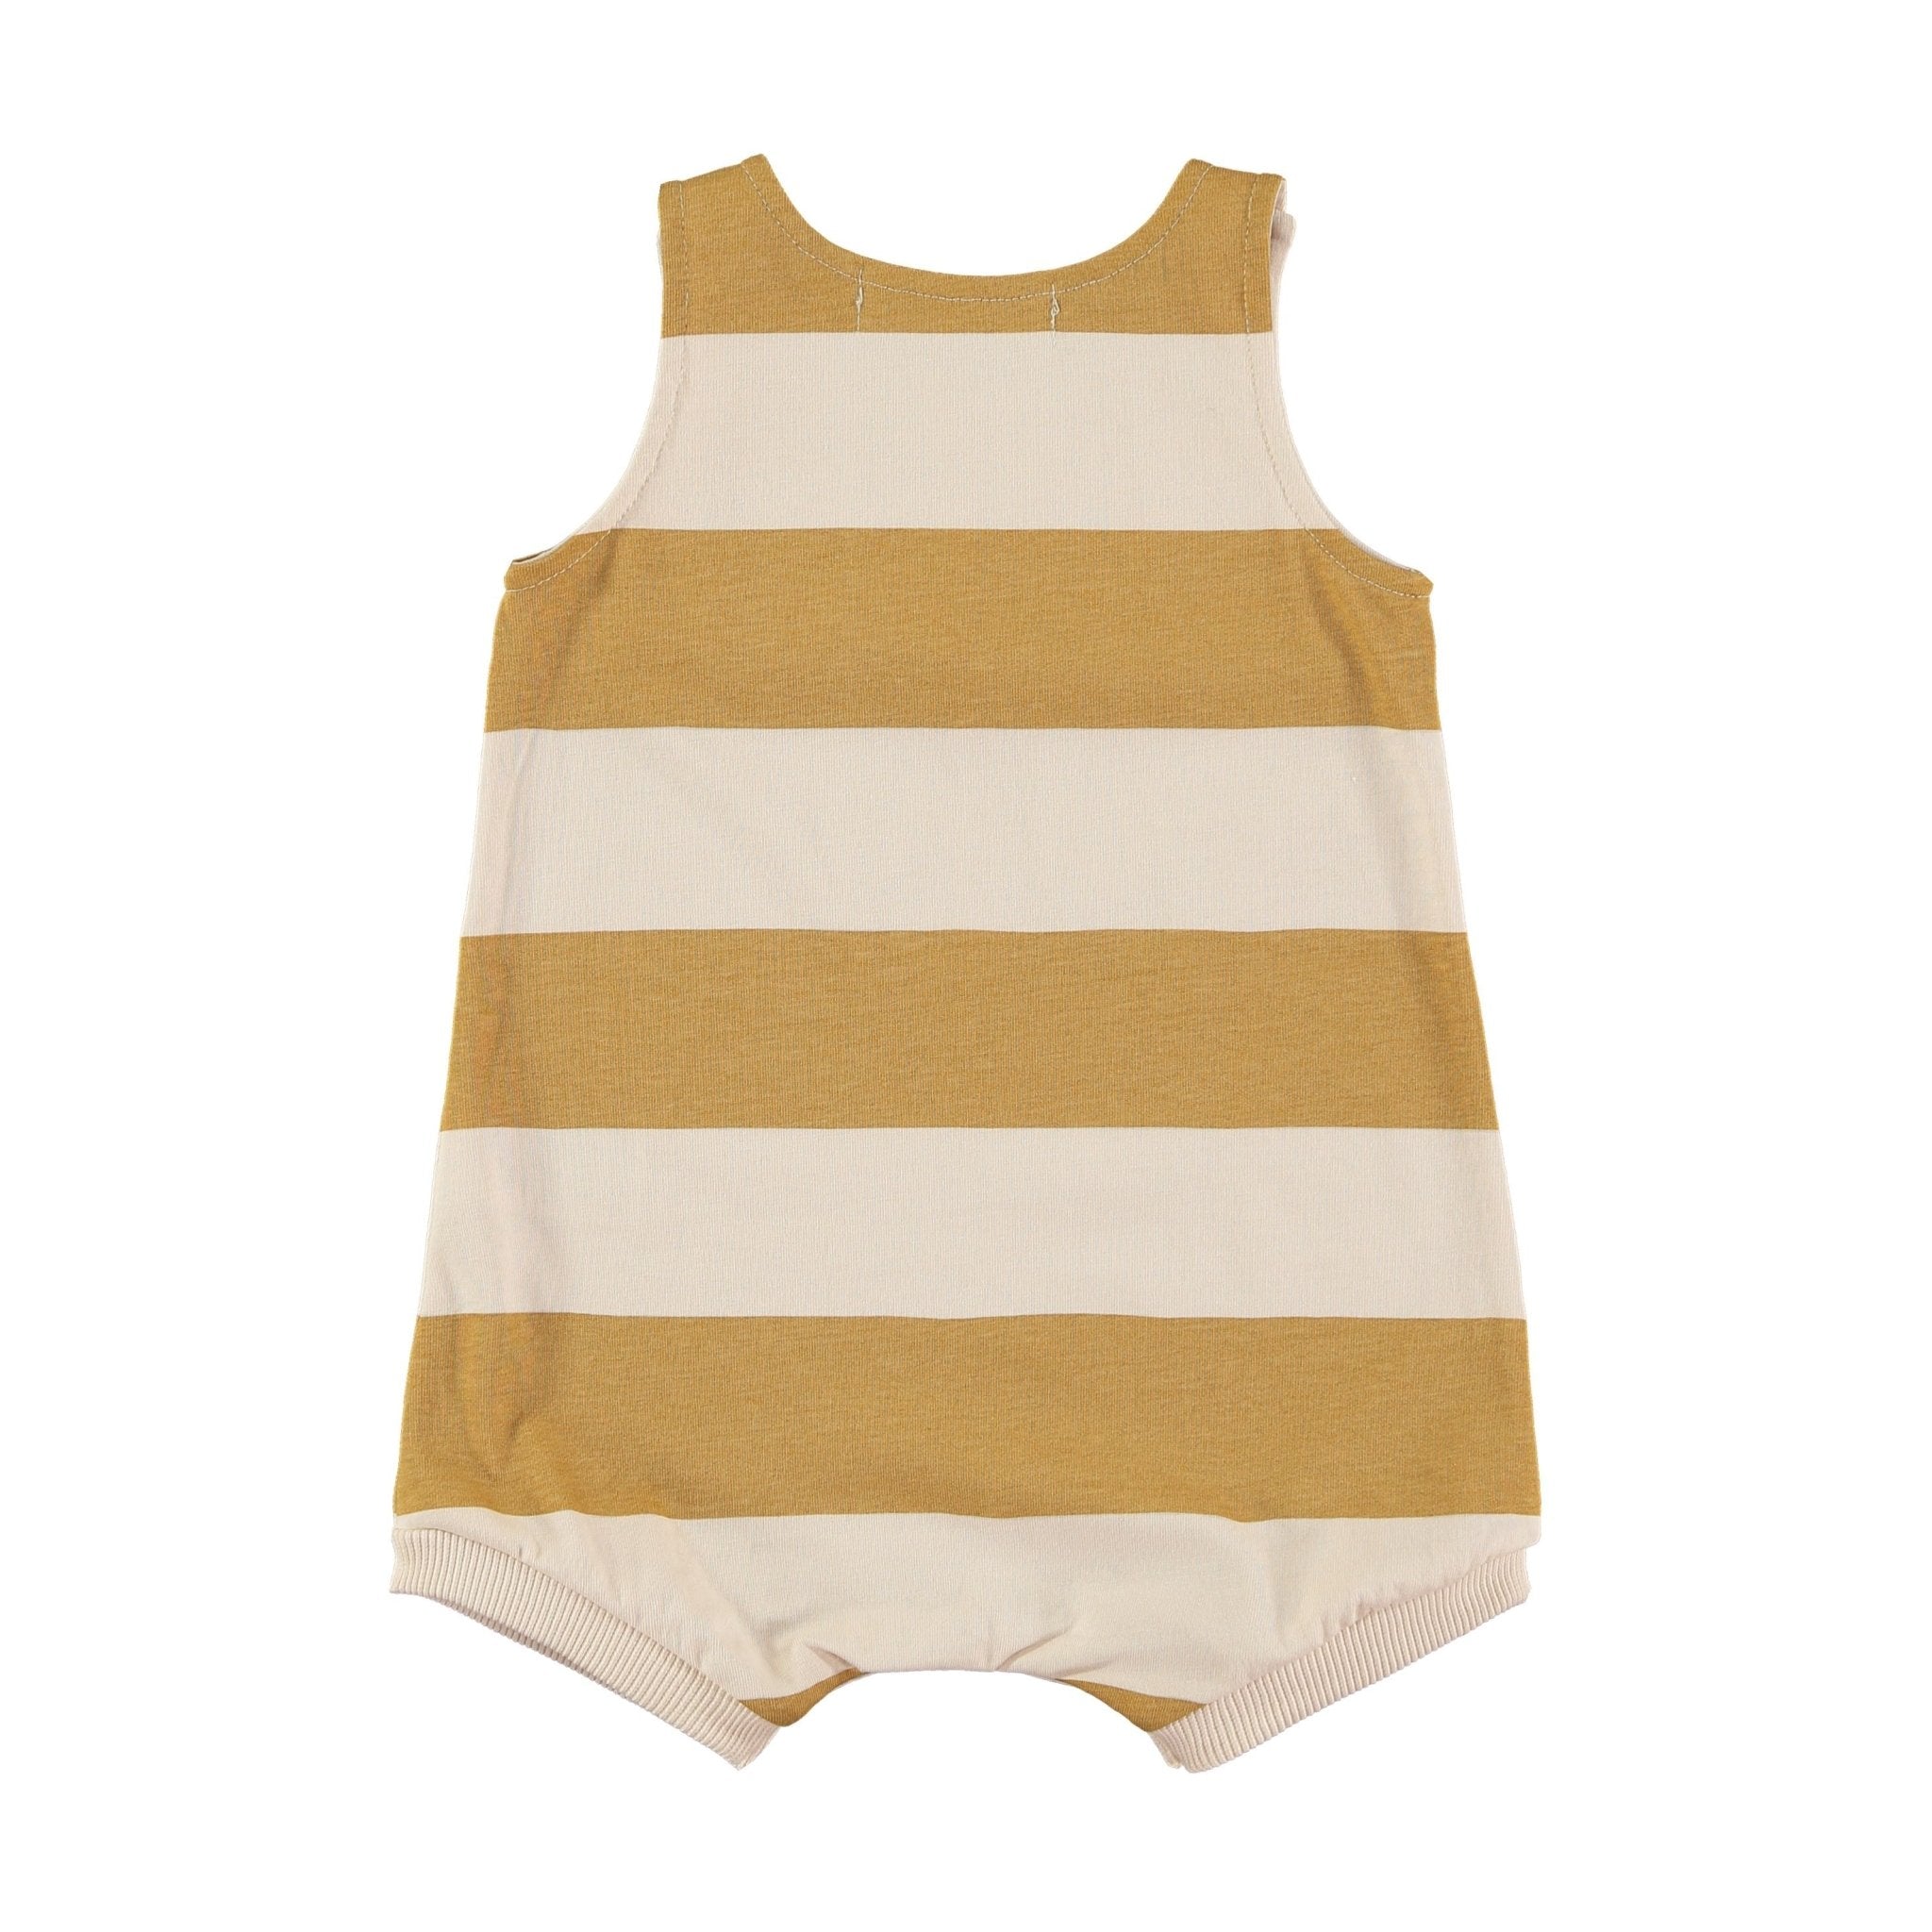 Pelele corto tirantes bebé Stripes Mustard Yellow Baby Clic-Babyclic-PetitGegant